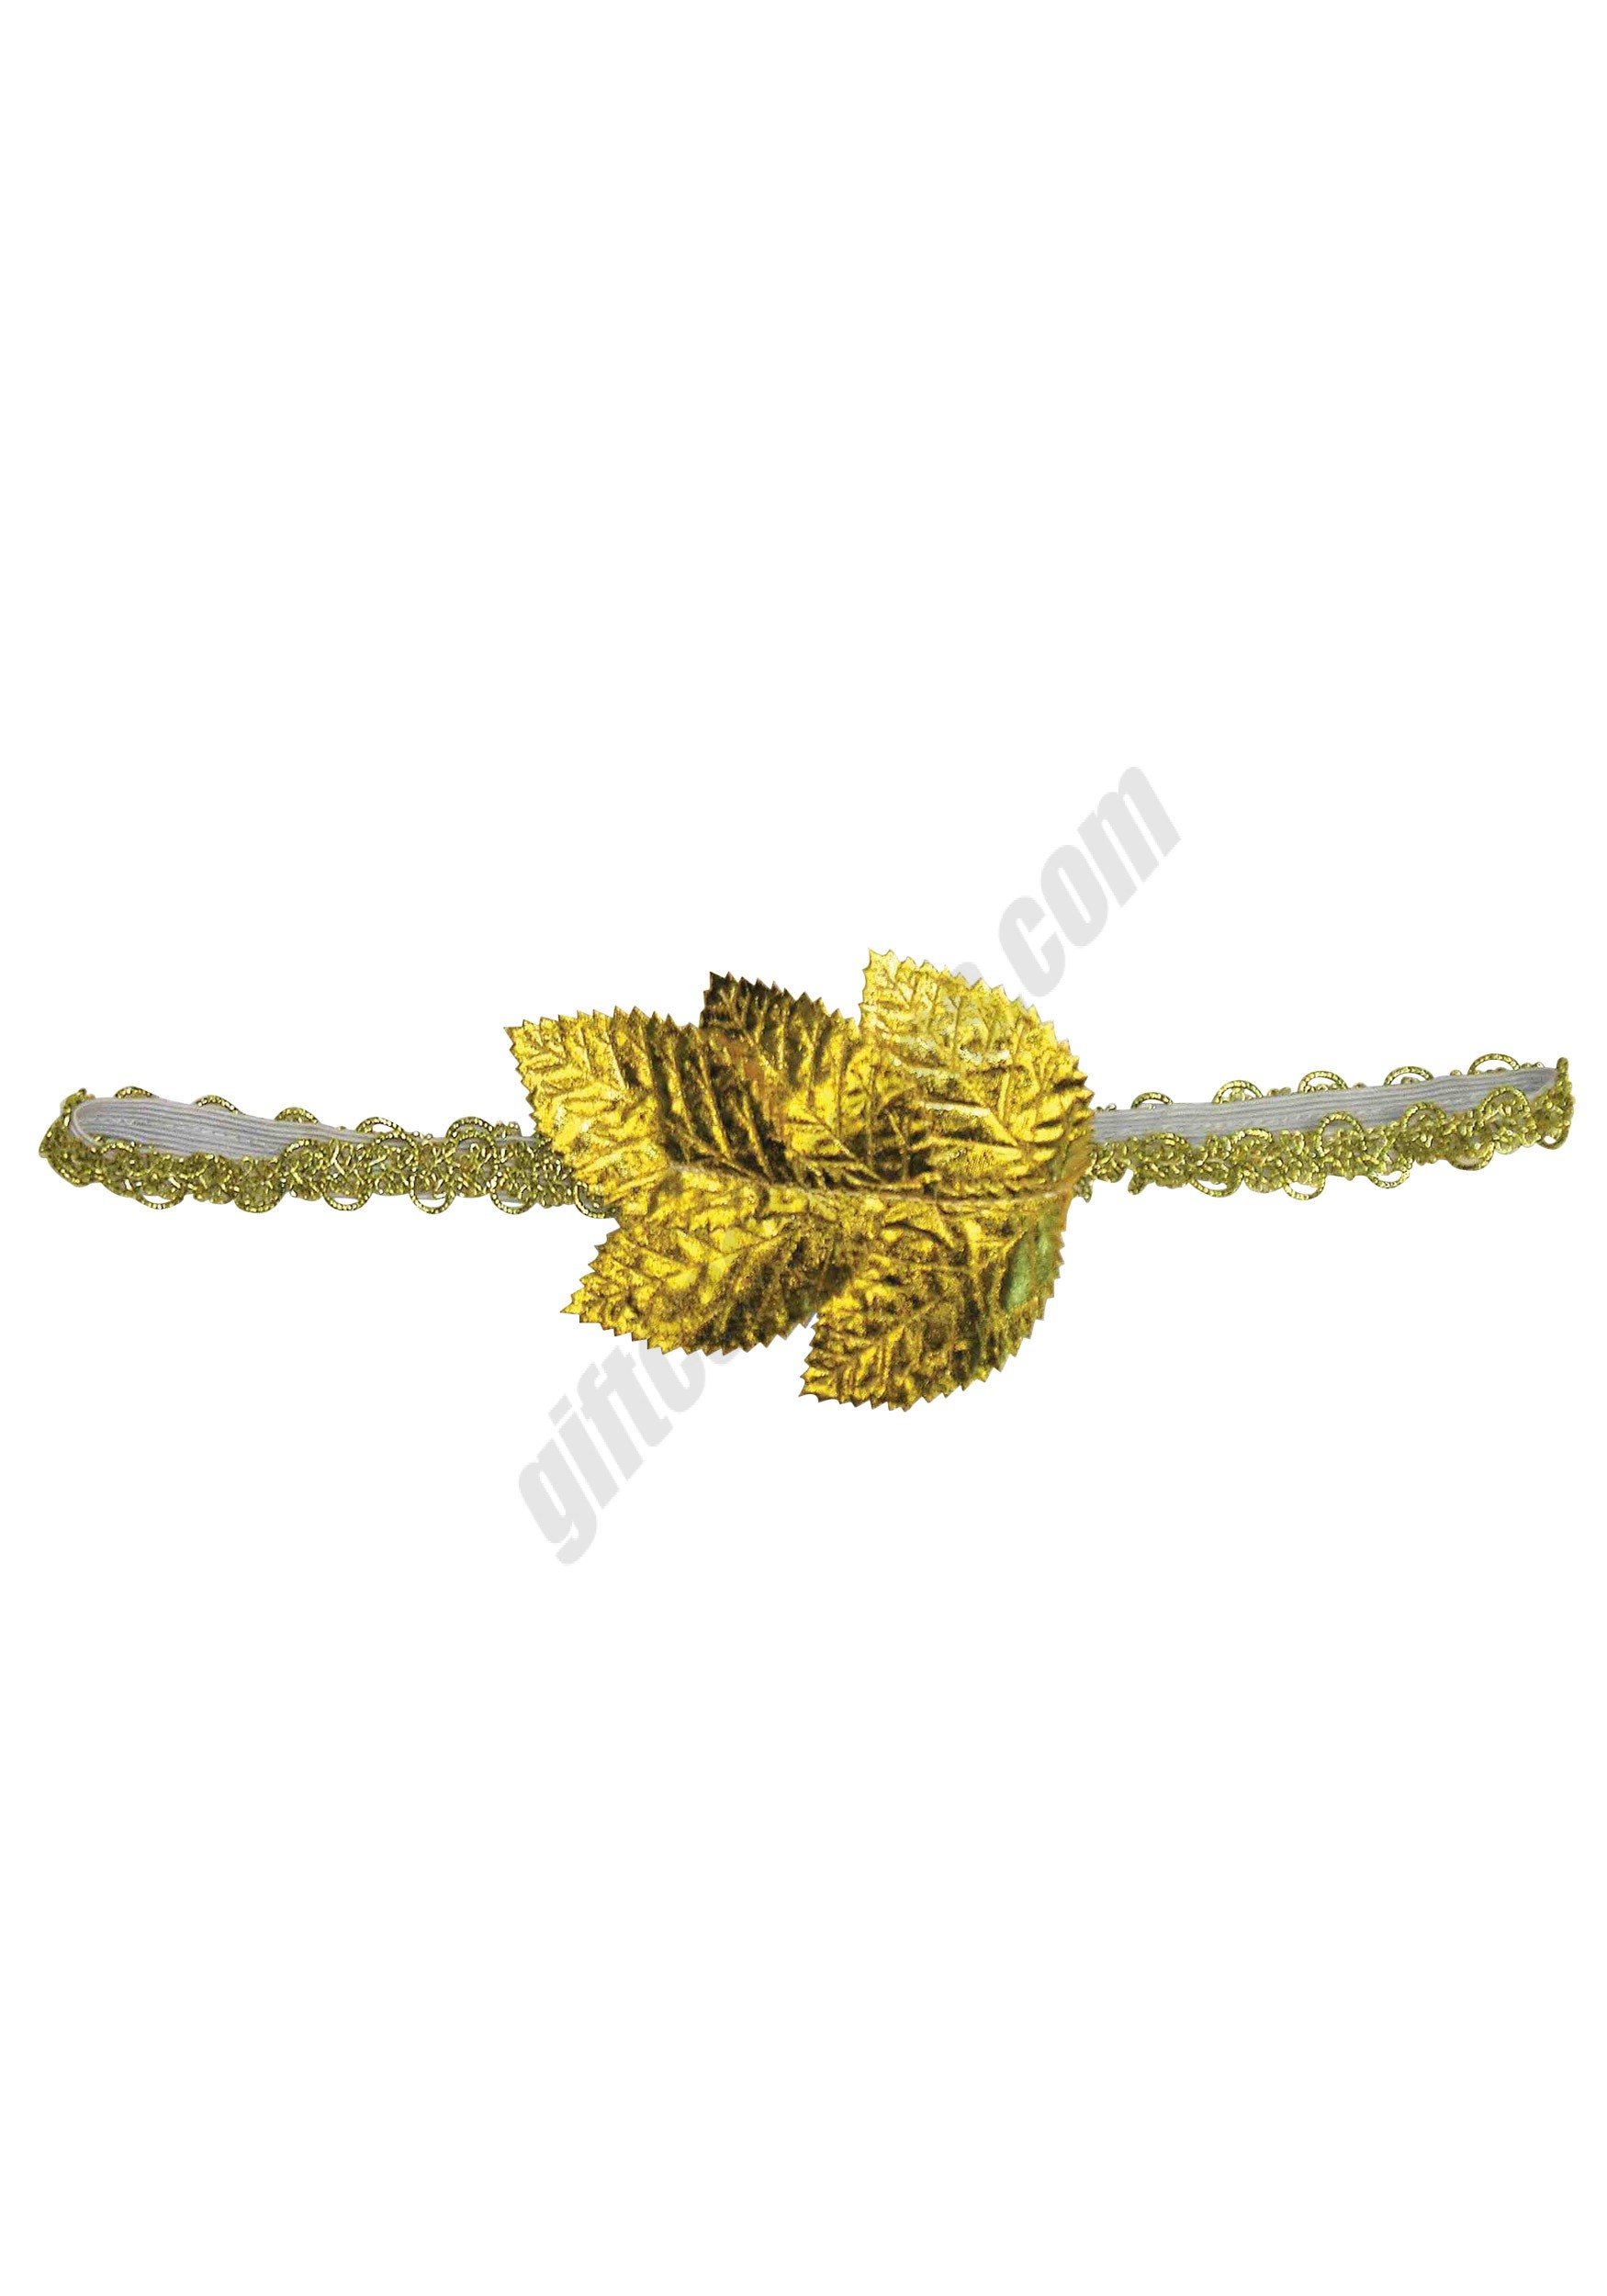 Gold Leaf Roman Headband Promotions - Gold Leaf Roman Headband Promotions